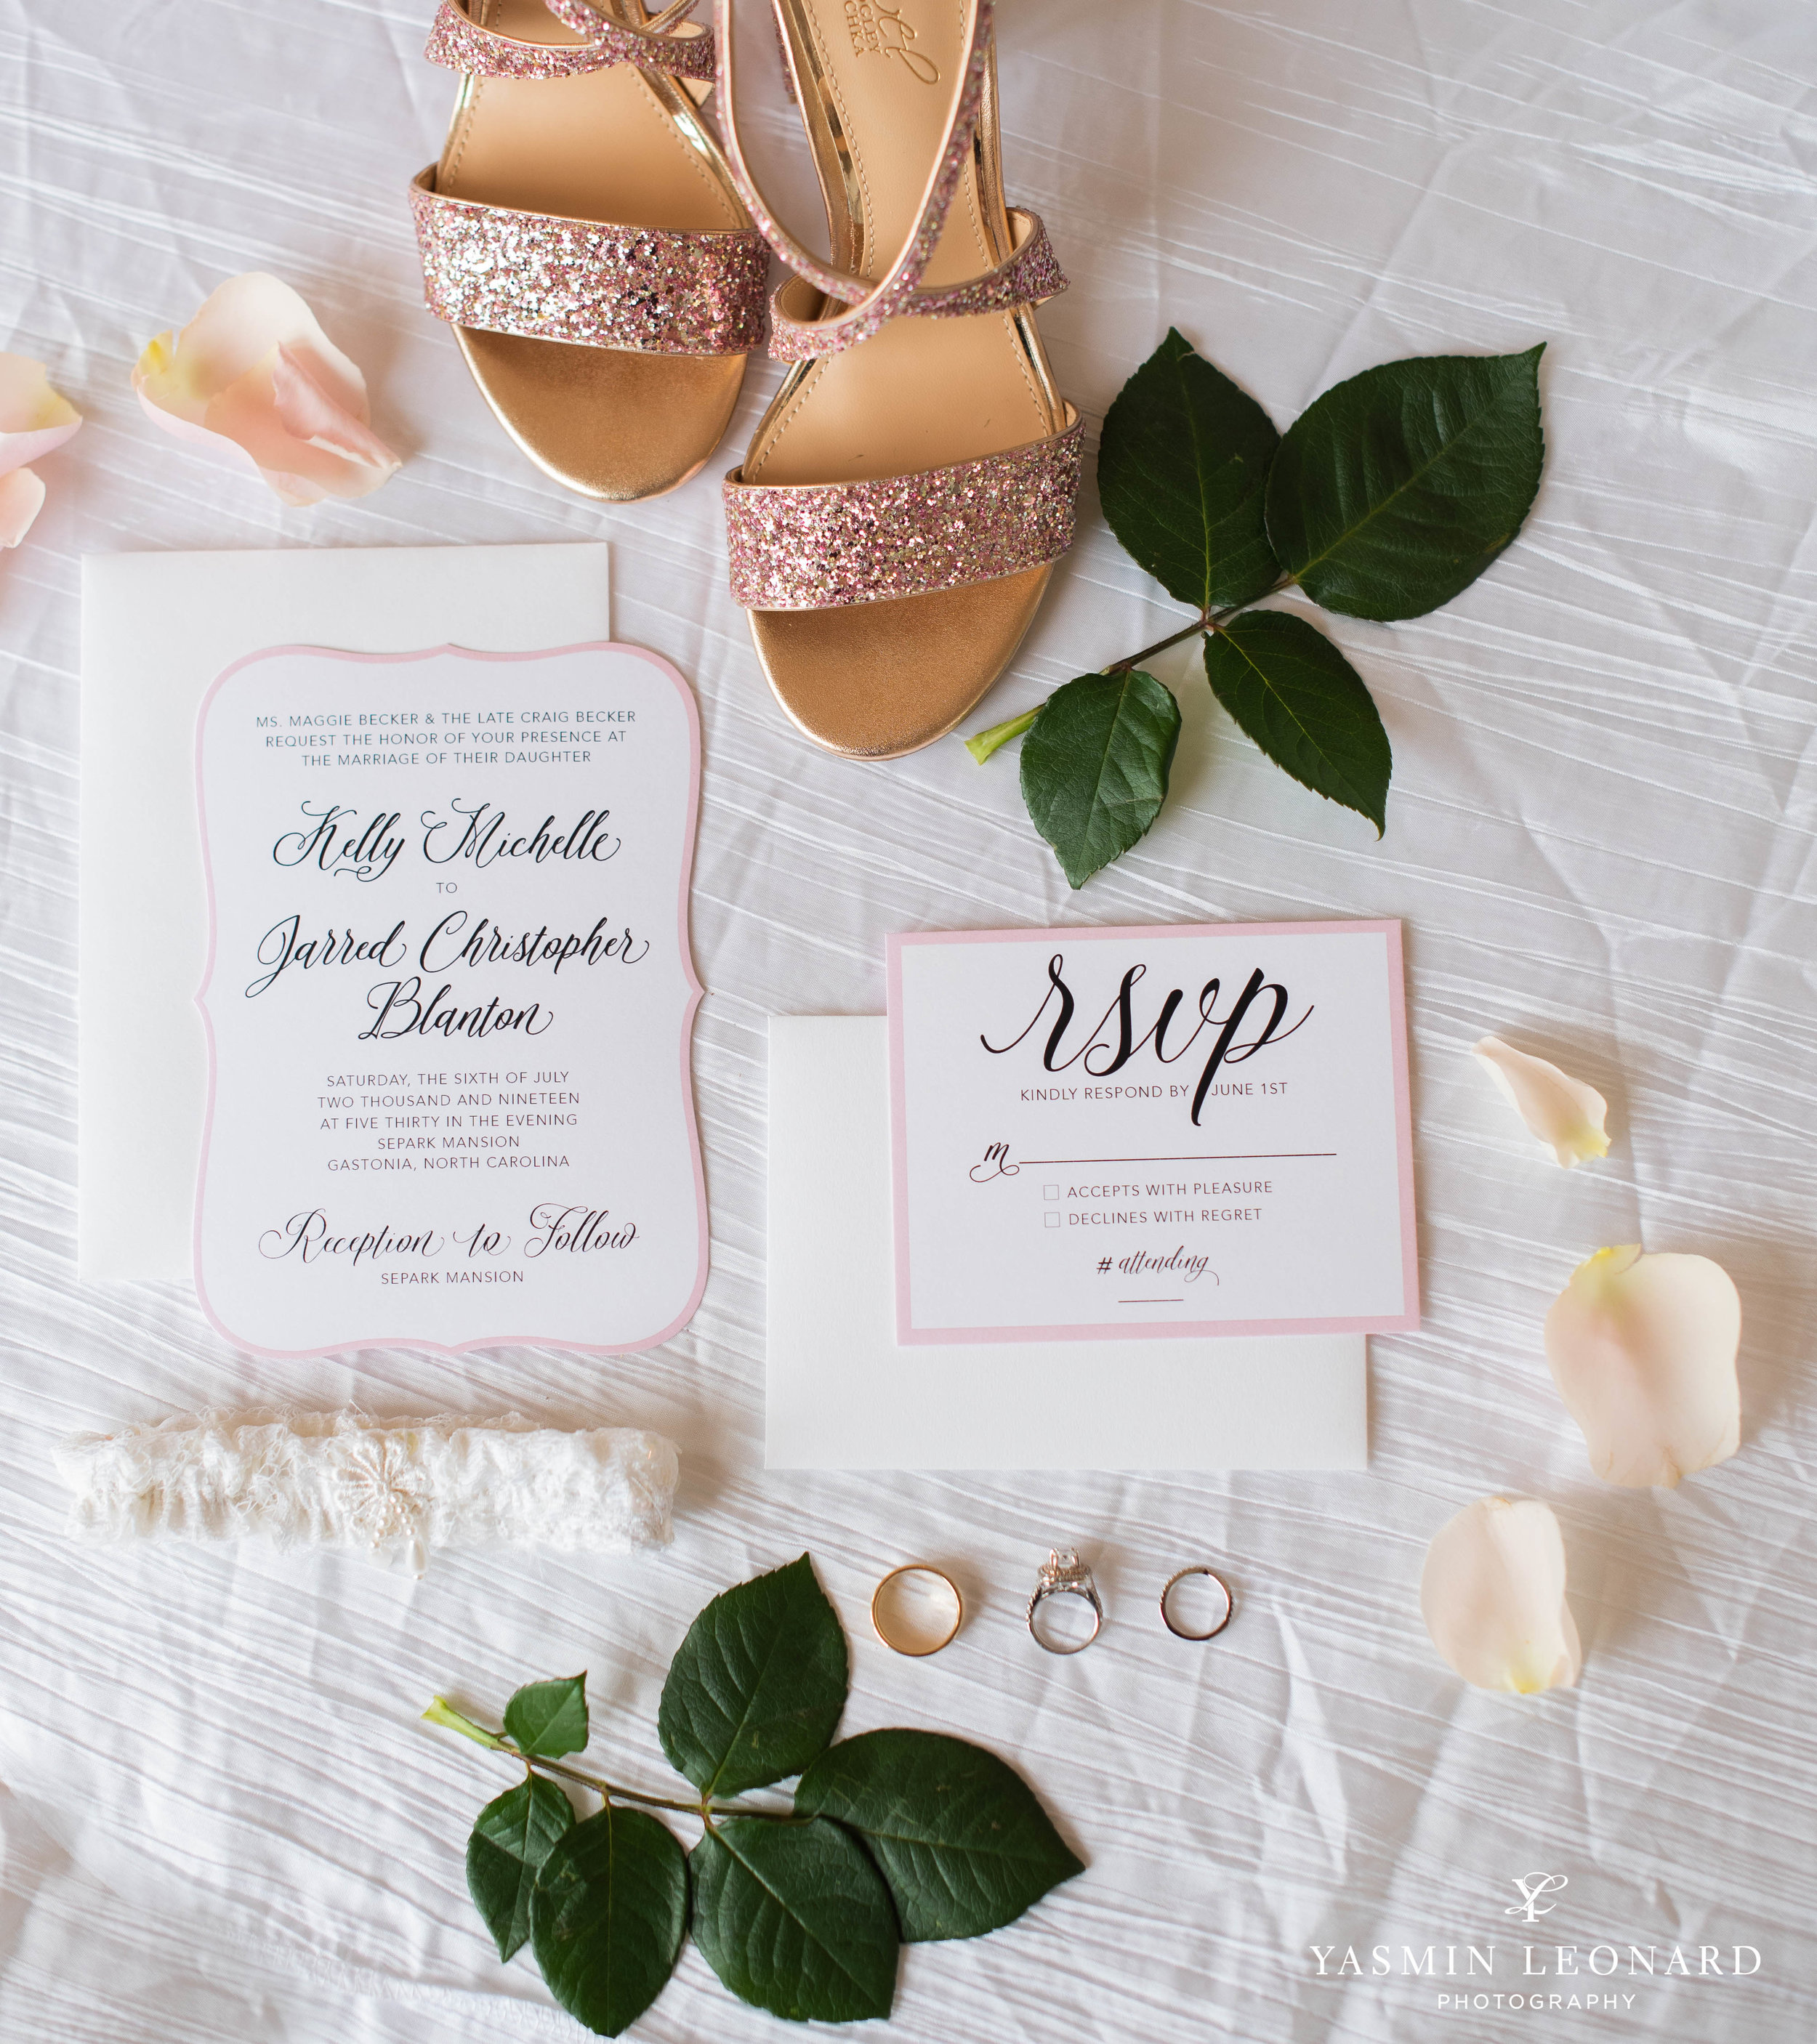 Separk Mansion - NC Weddings - Gastonia Wedding - NC Wedding Venues - Pink and Blue Wedding Ideas - Pink Bridesmaid Dresses - Yasmin Leonard Photography-3.jpg